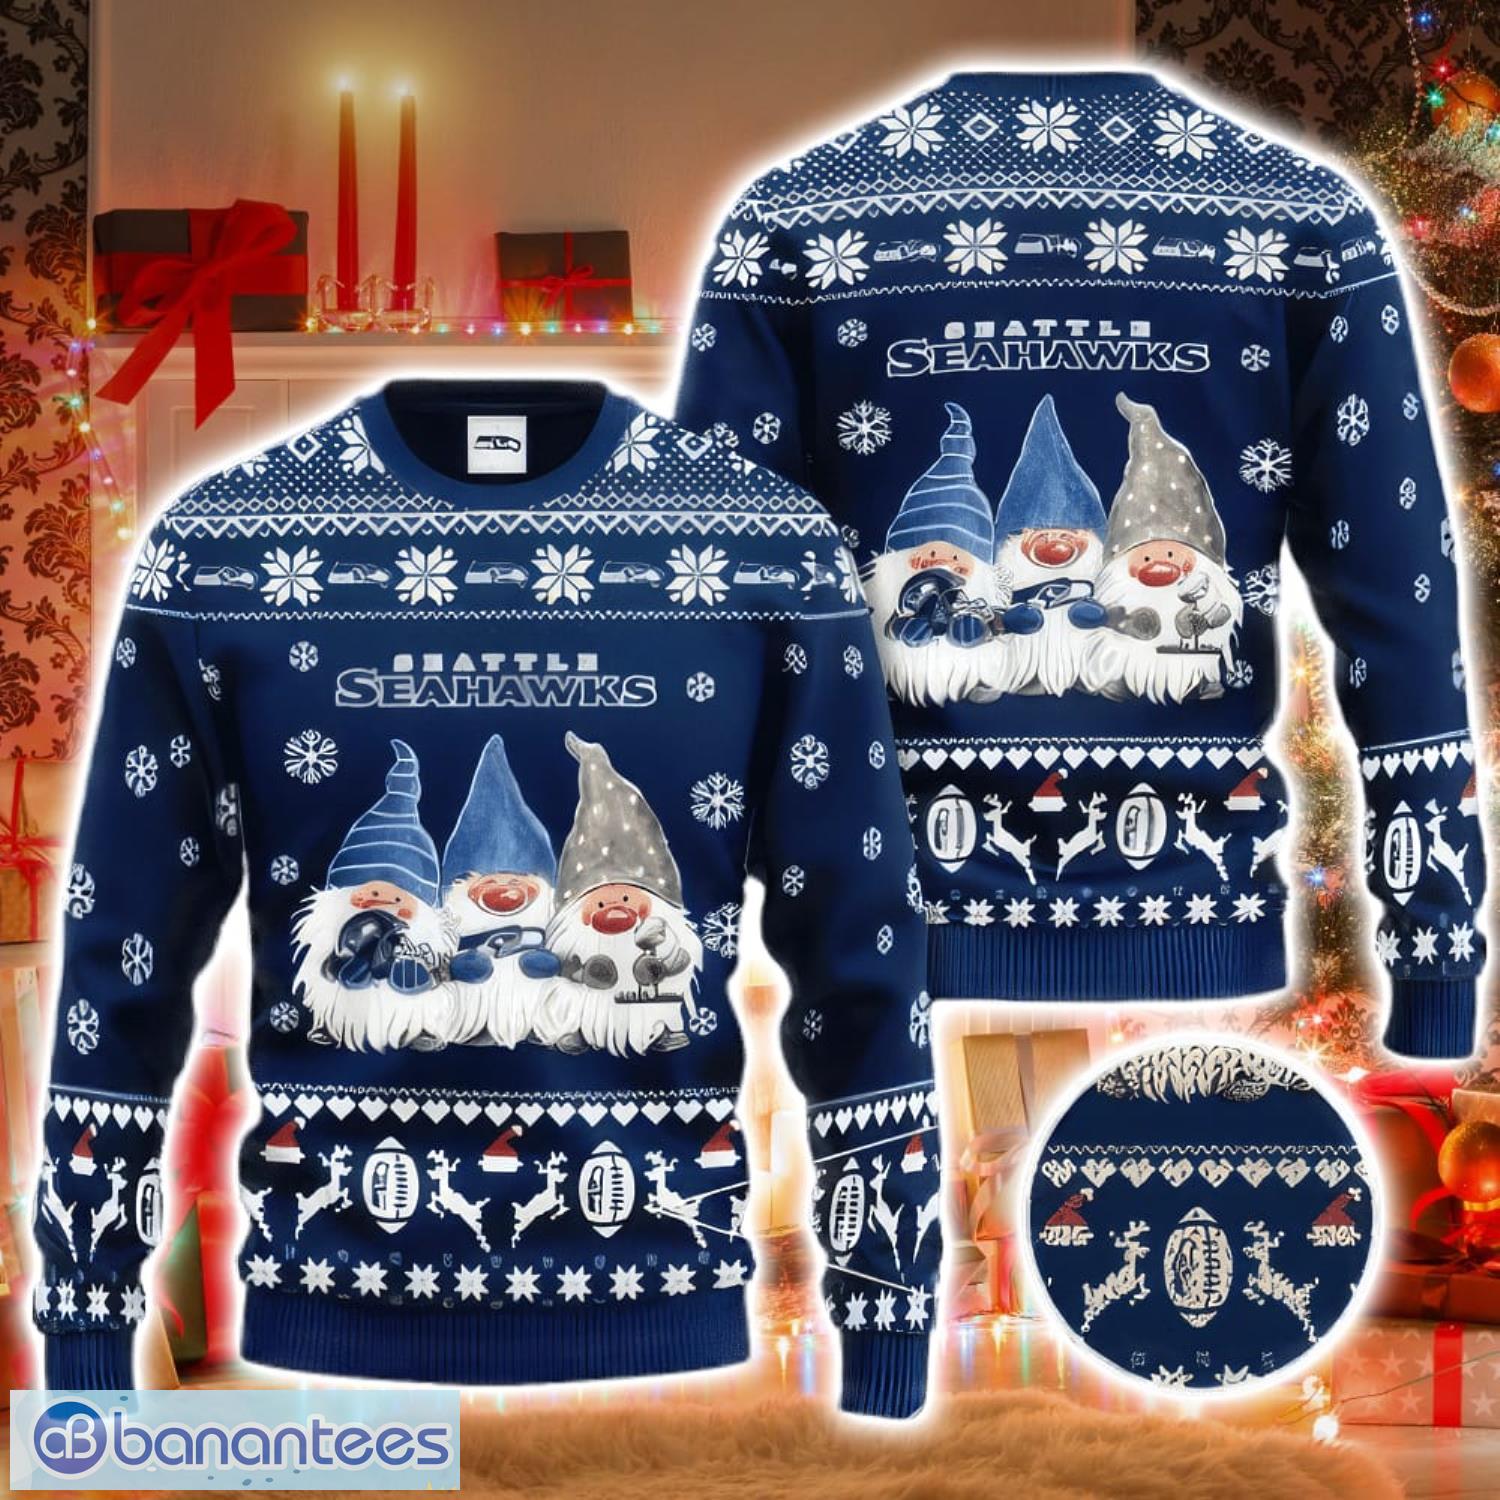 NFL Seattle Seahawks Christmas Sweater Xmas Gift - Banantees